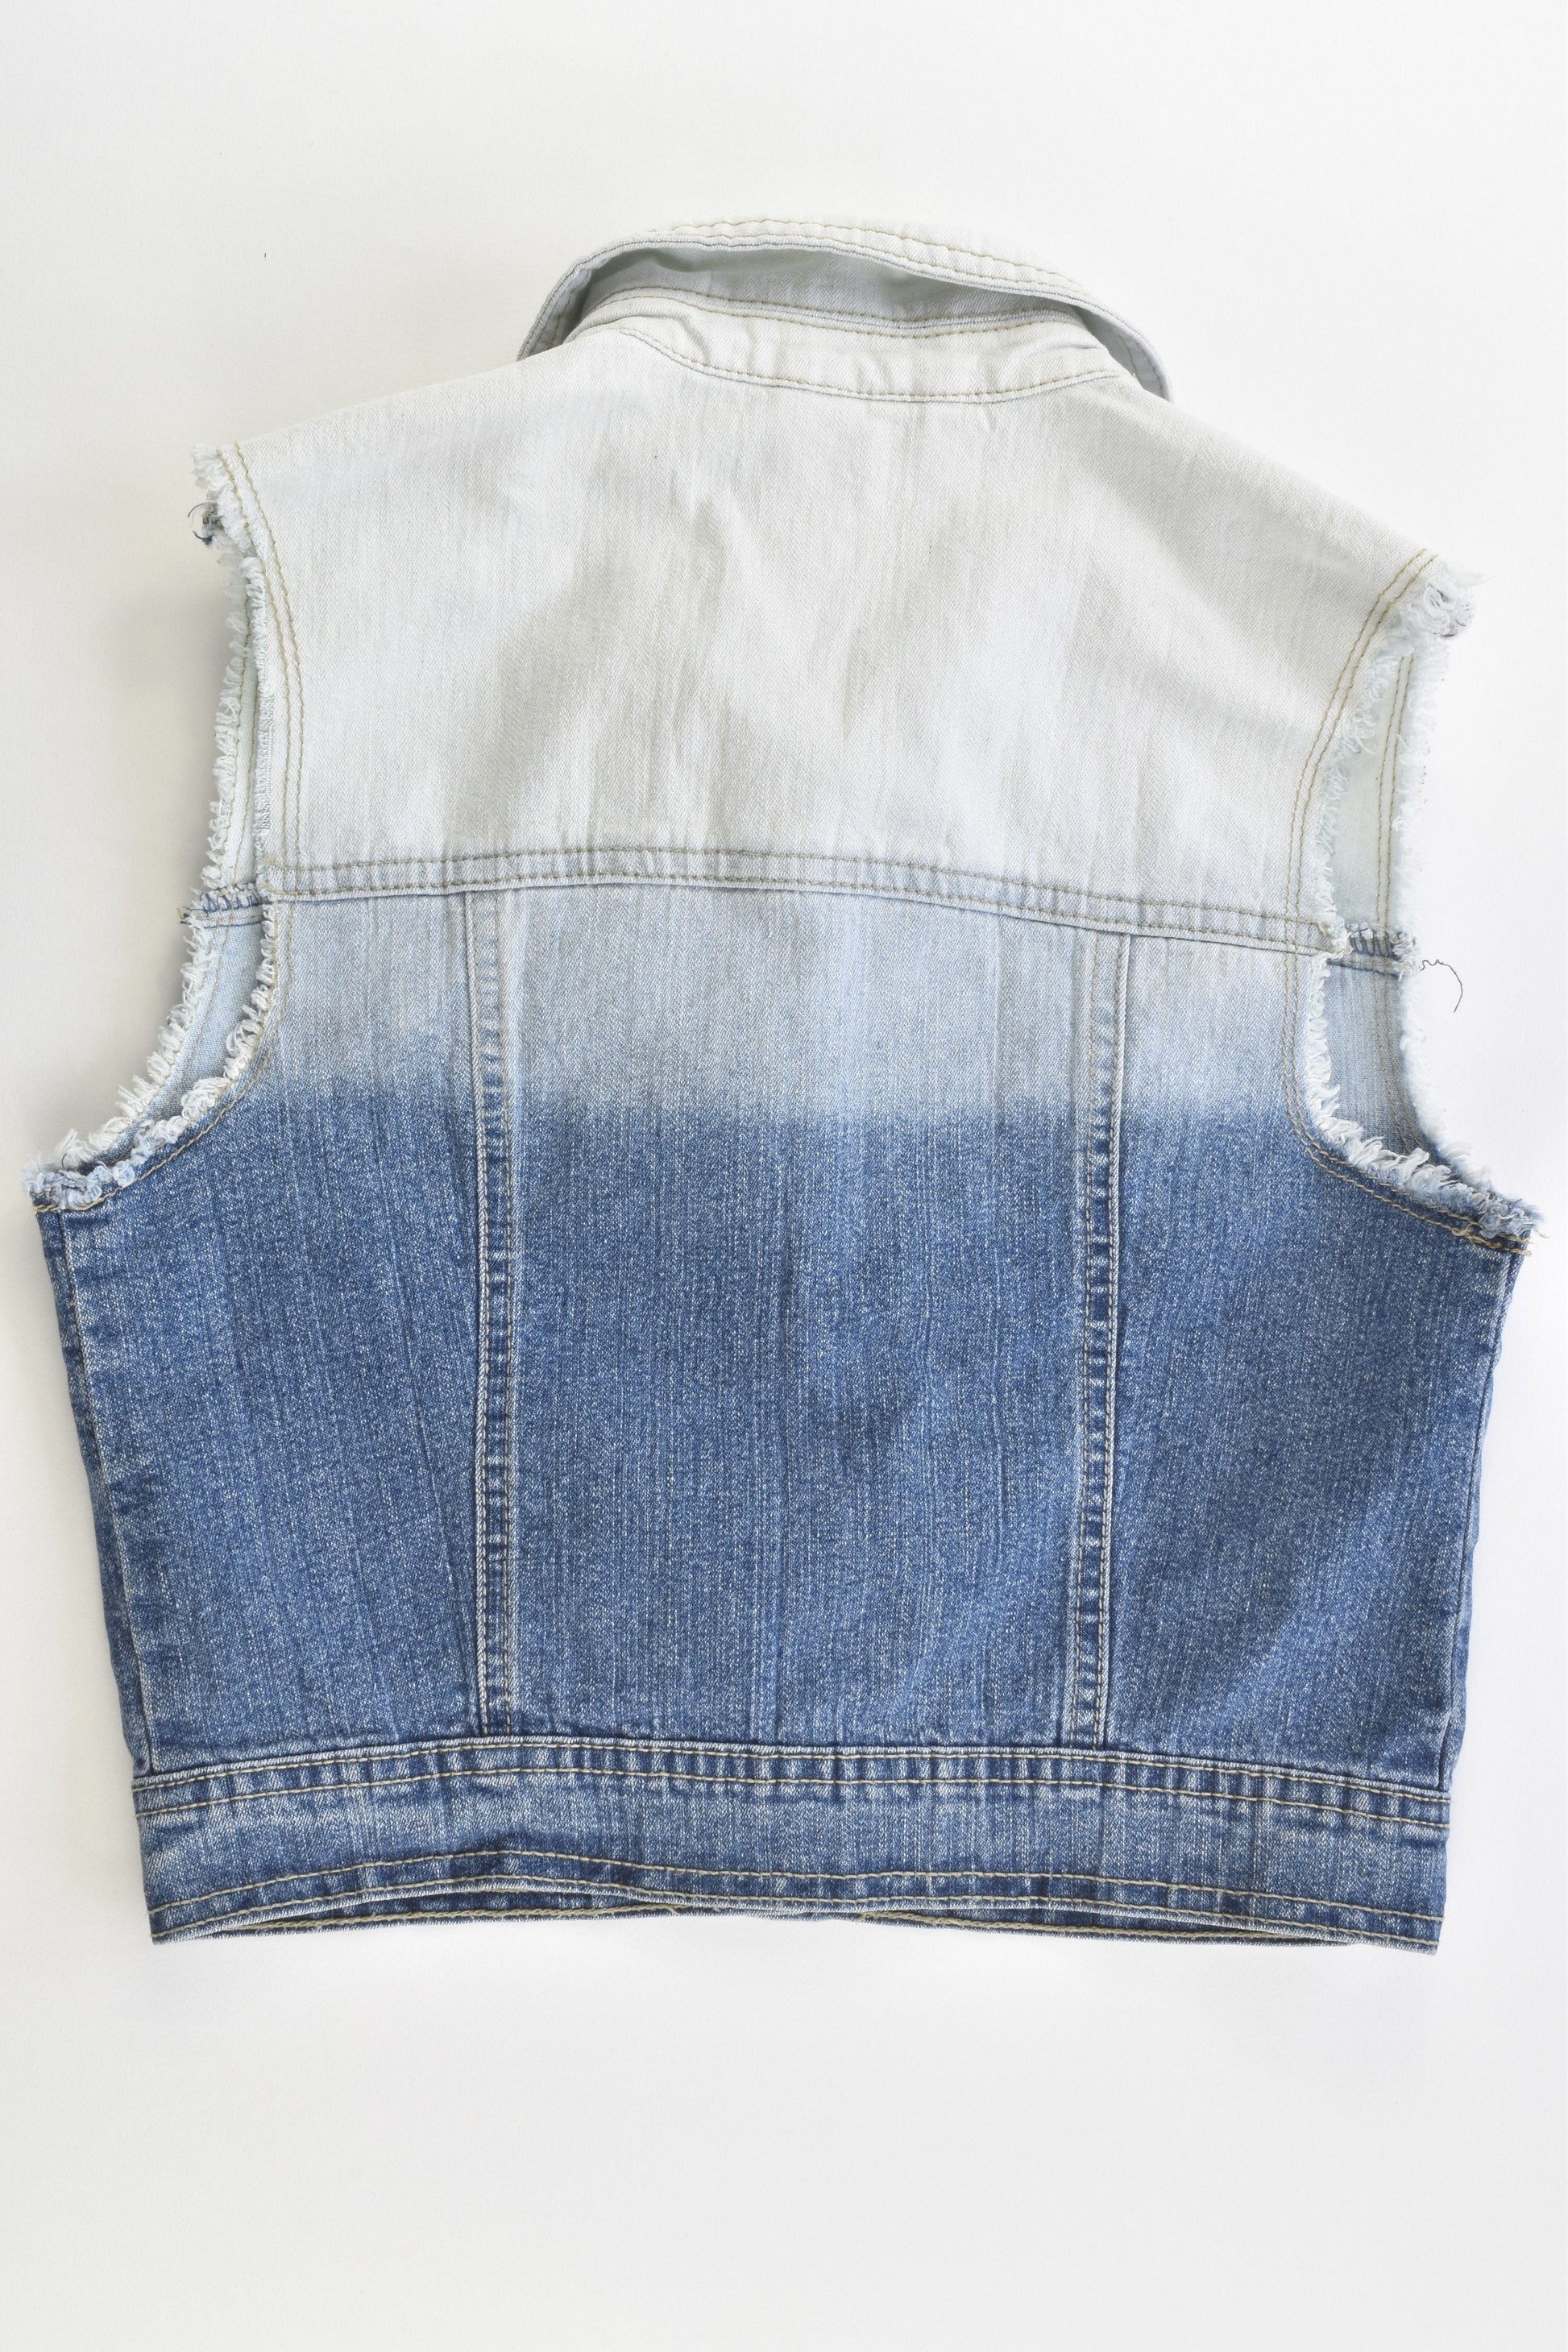 Brand Unknown Size approx 5-6 Stretchy Denim Vest